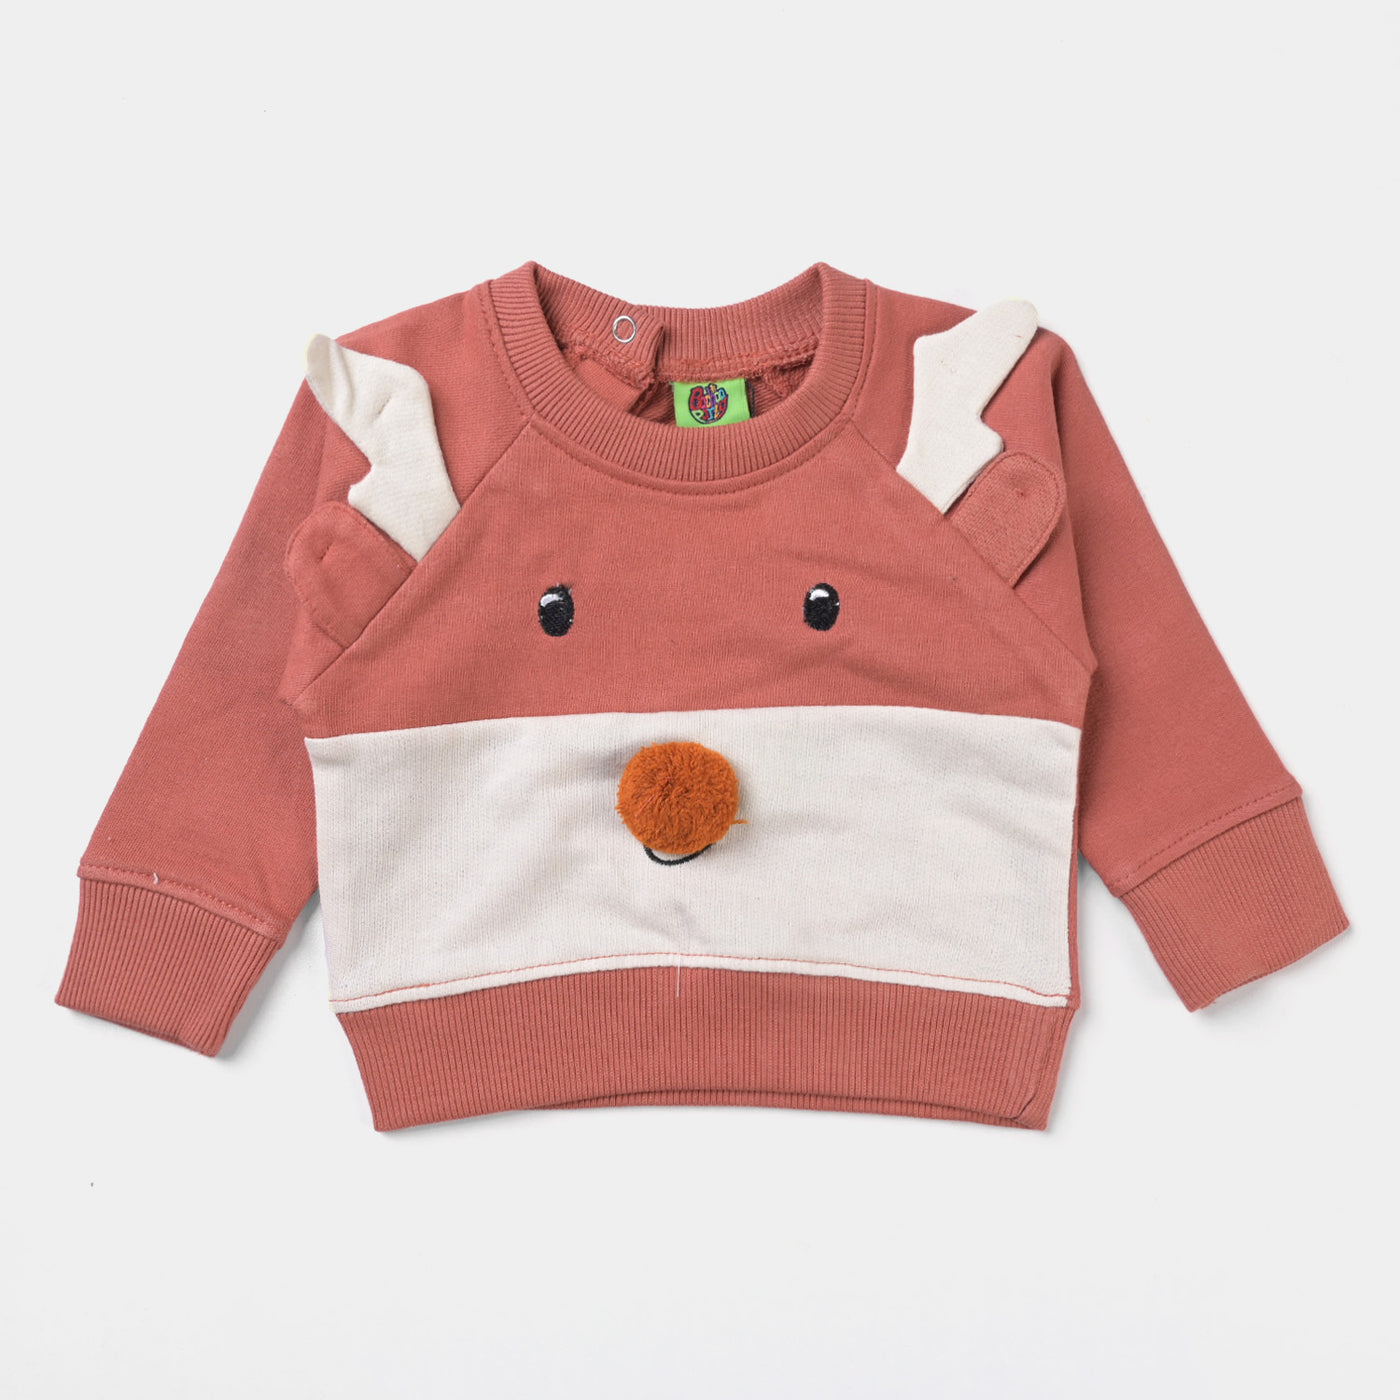 Infant Boys Fleece Knitted 2PC Suit Dear Face-Mecca Orange